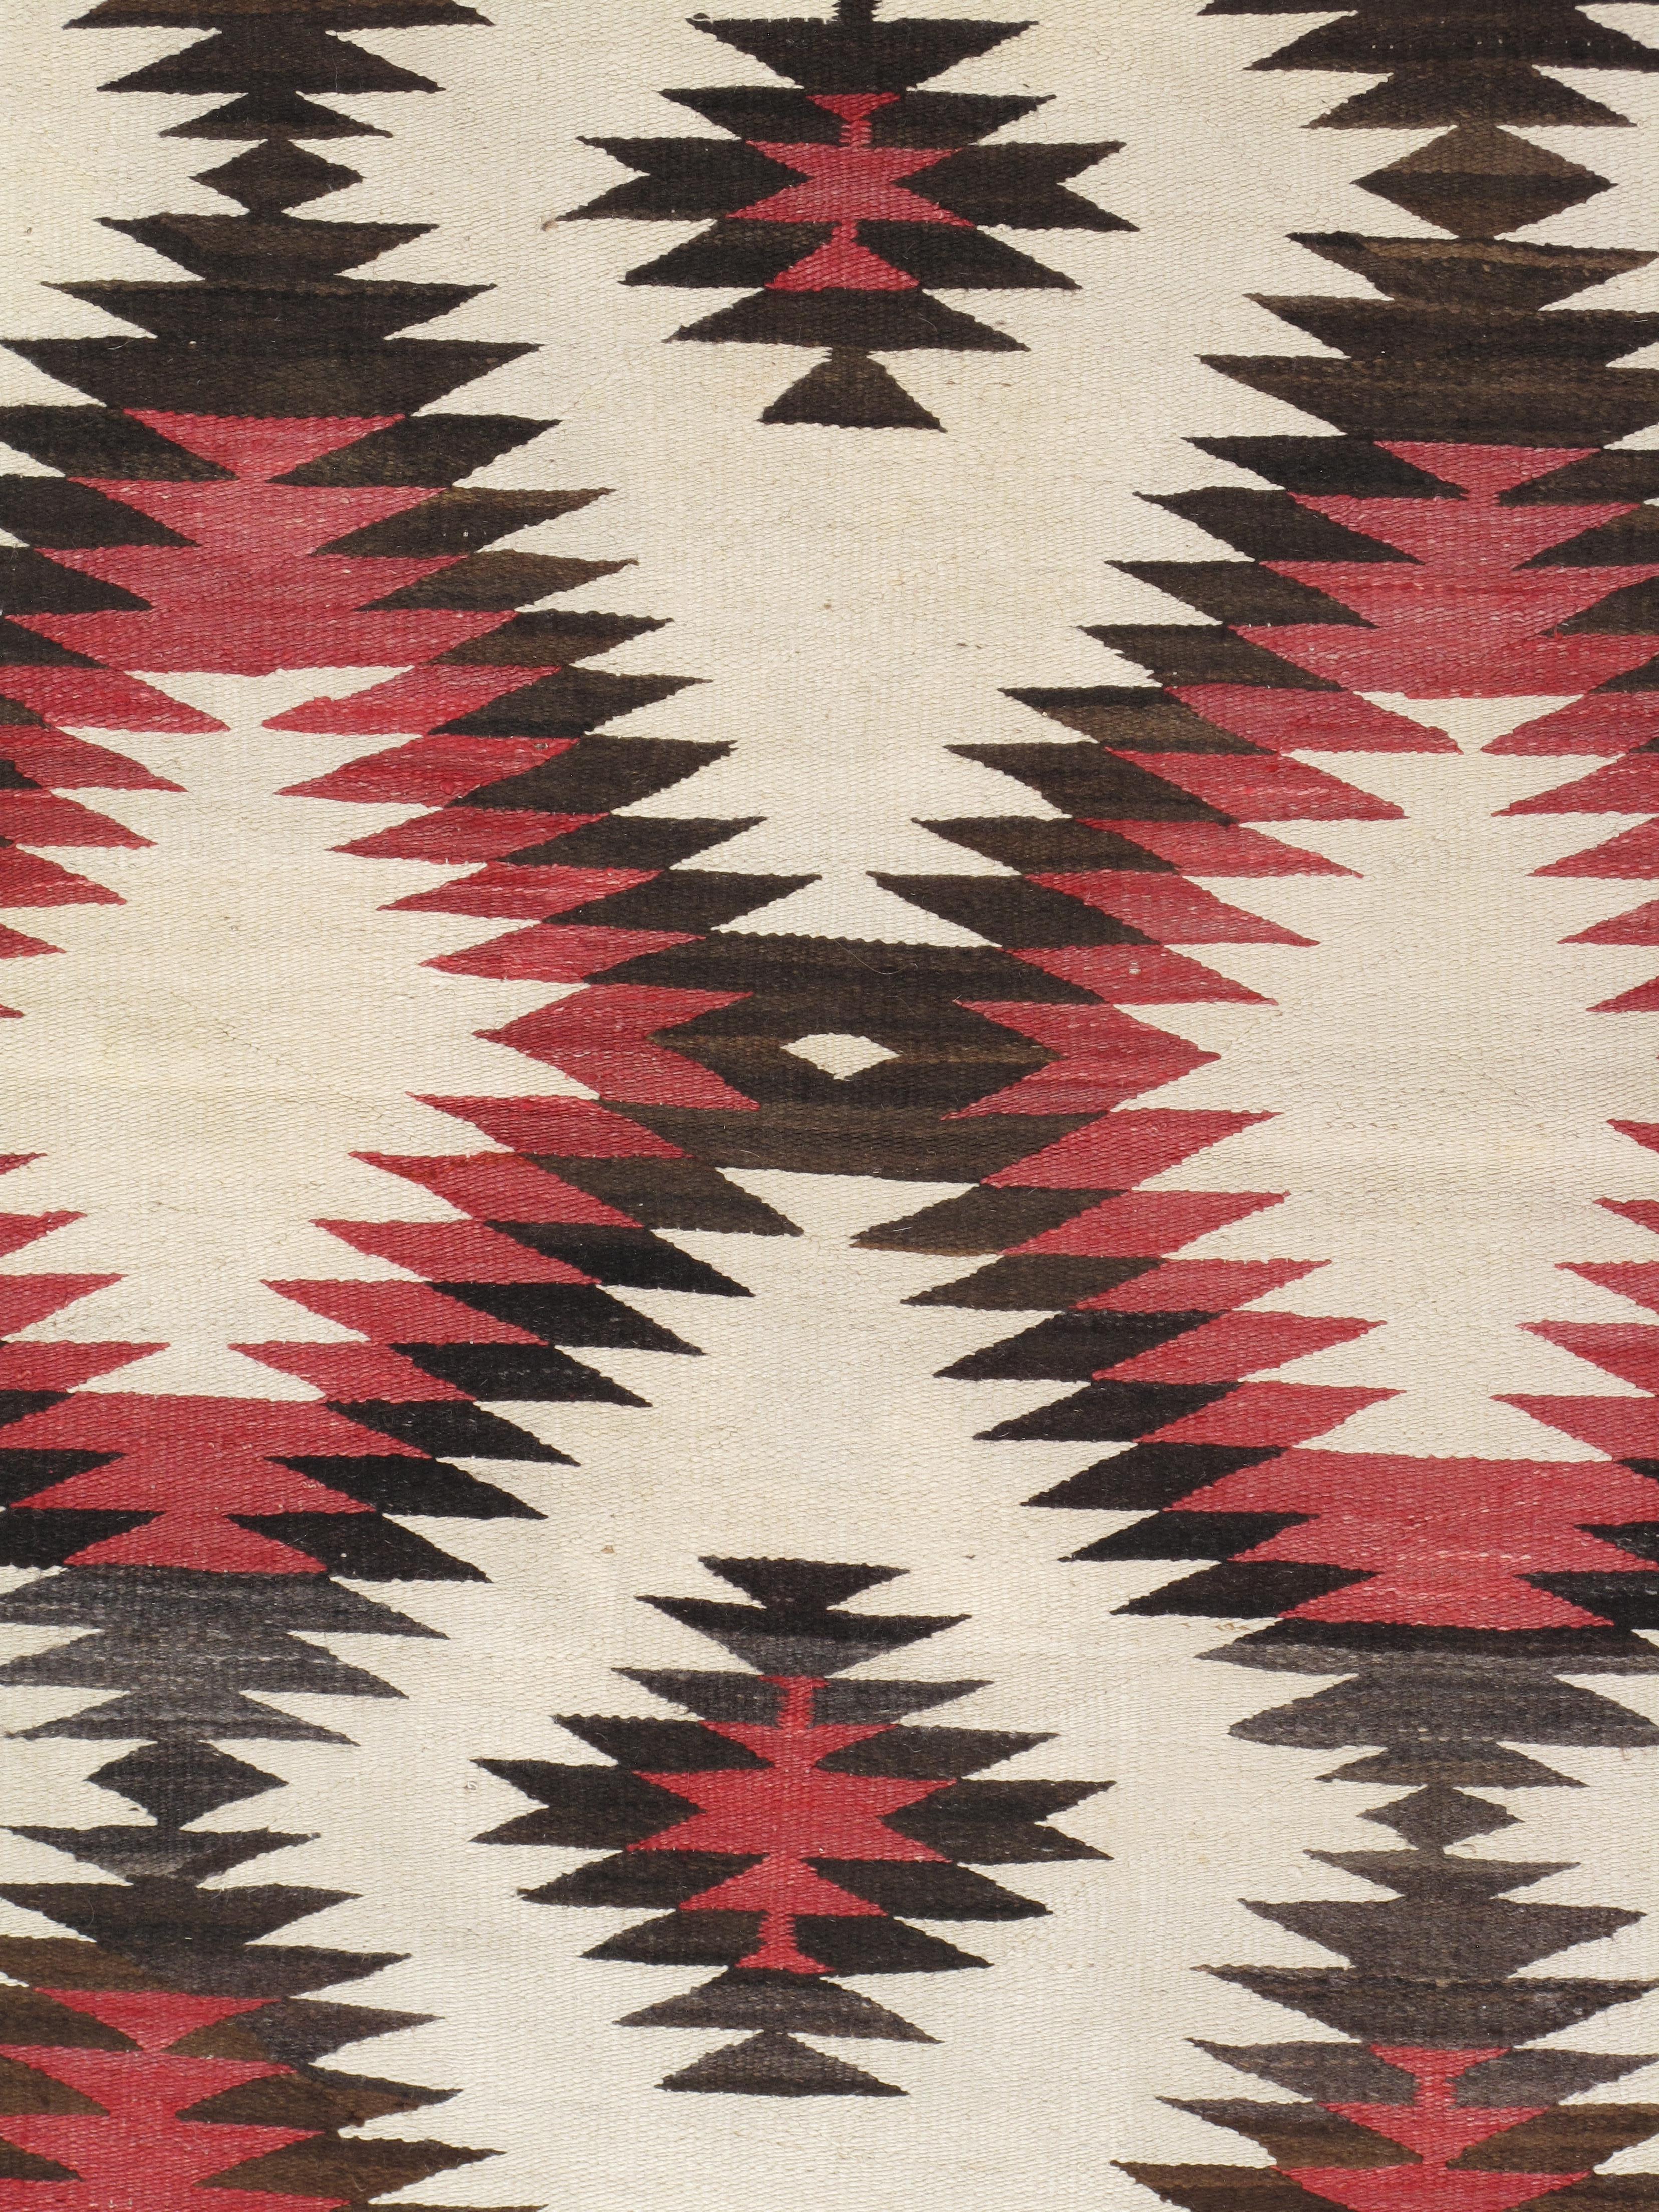 Hand-Woven Antique Navajo Carpet, Folk Rug, Handmade Wool, Red, Black, Ivory, Brown